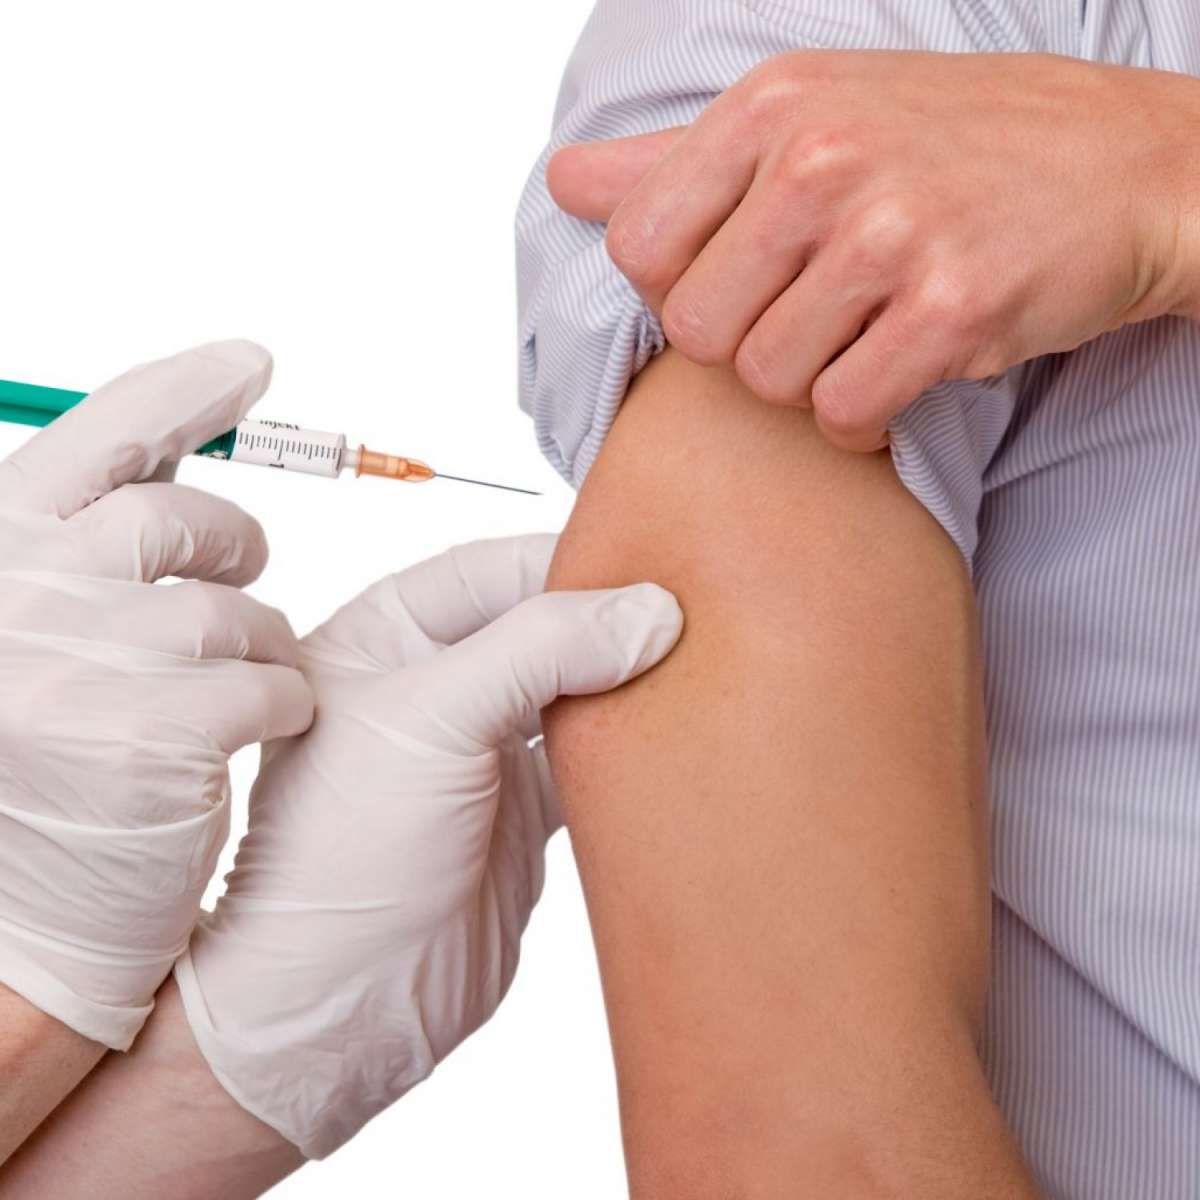 Вакцины от гриппа не спасут от болезни